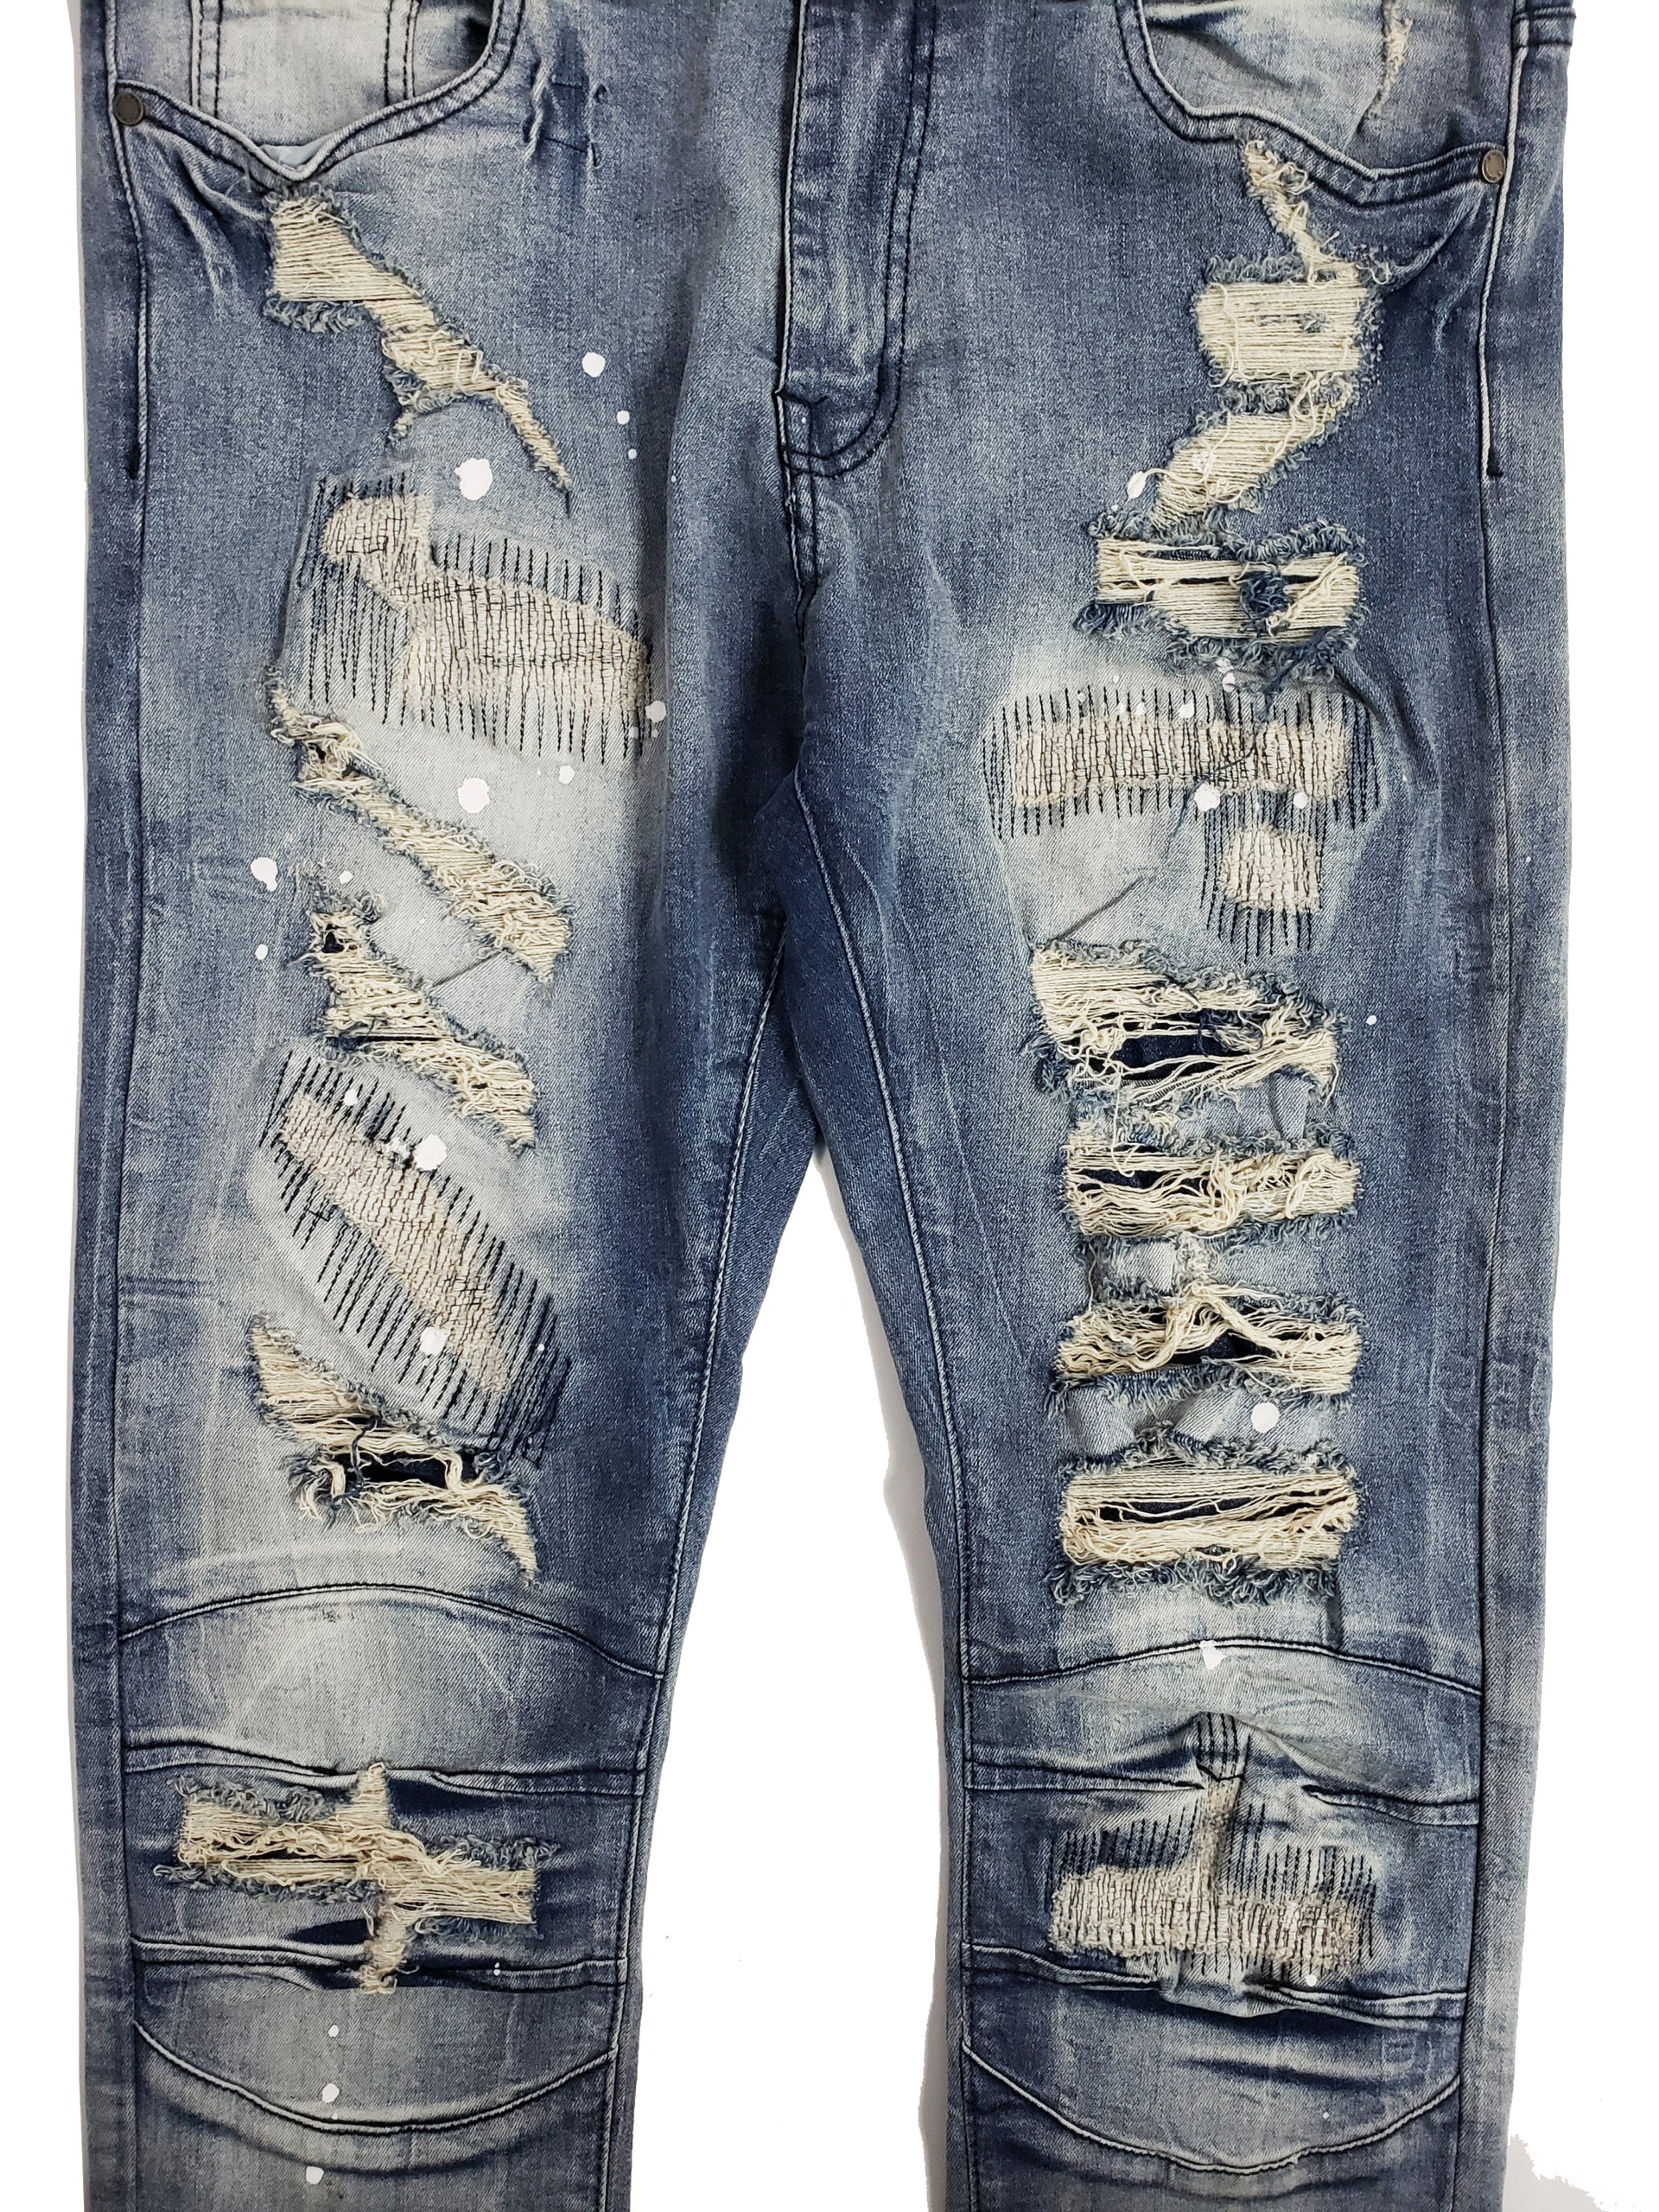 DIVISION | Men's Slim Fit Denim Pants Rip & Repair 3D Knee Detail with Splatter Paint in Vintage Dark Wash